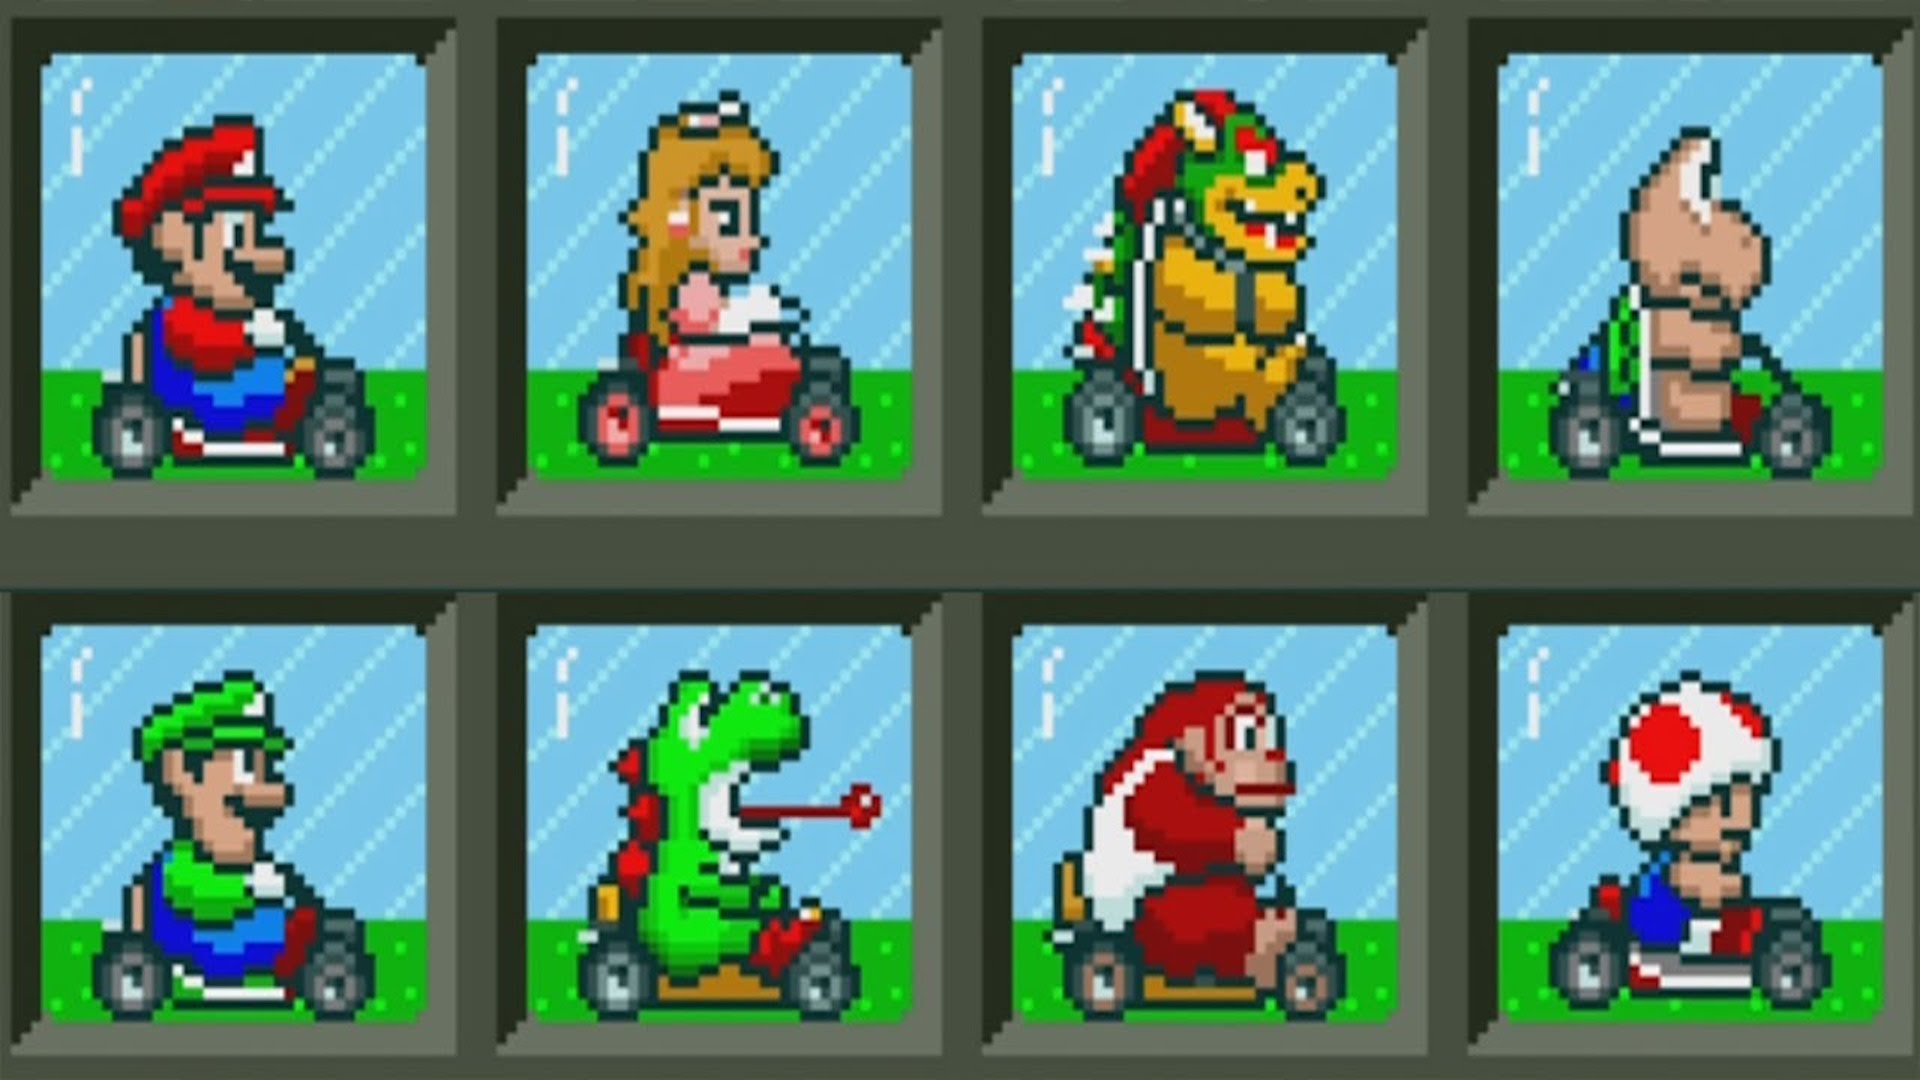 Mario Kart player selection screen